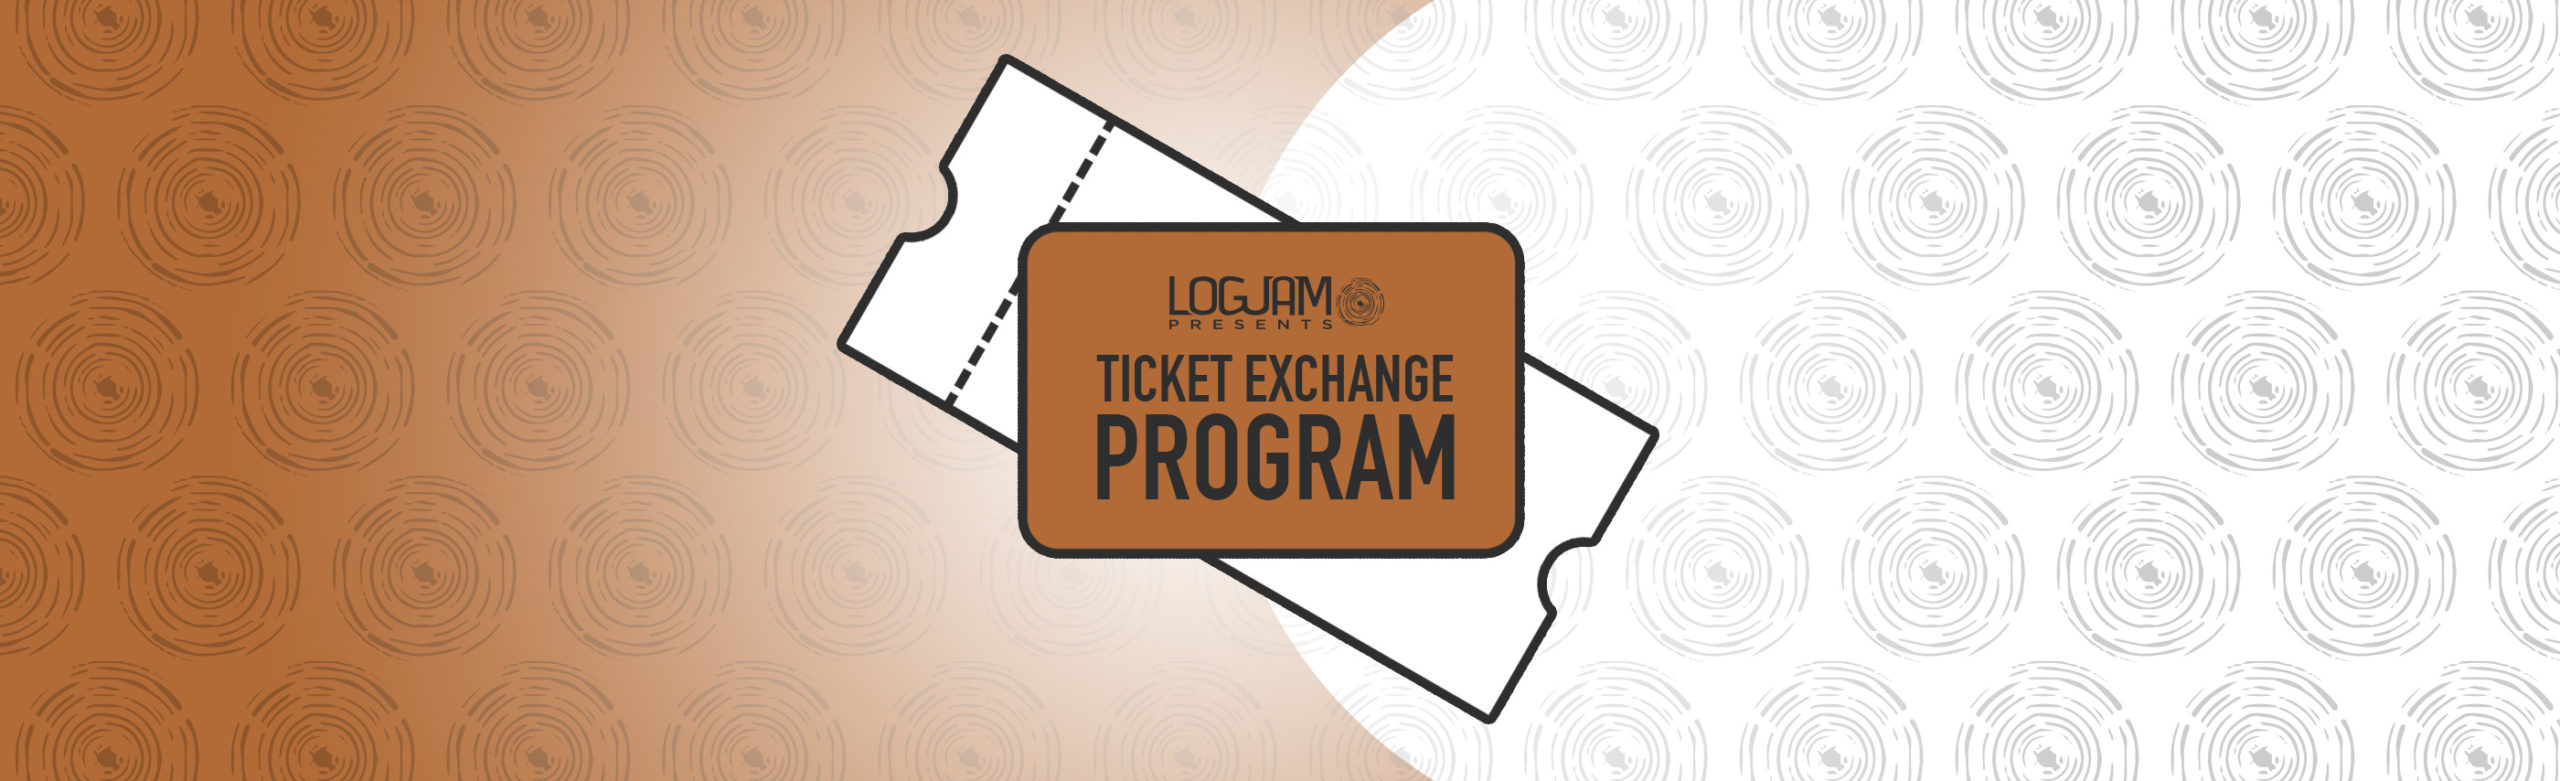 Logjam Presents Offers Ticket Exchange Program for Impacted Concerts Image